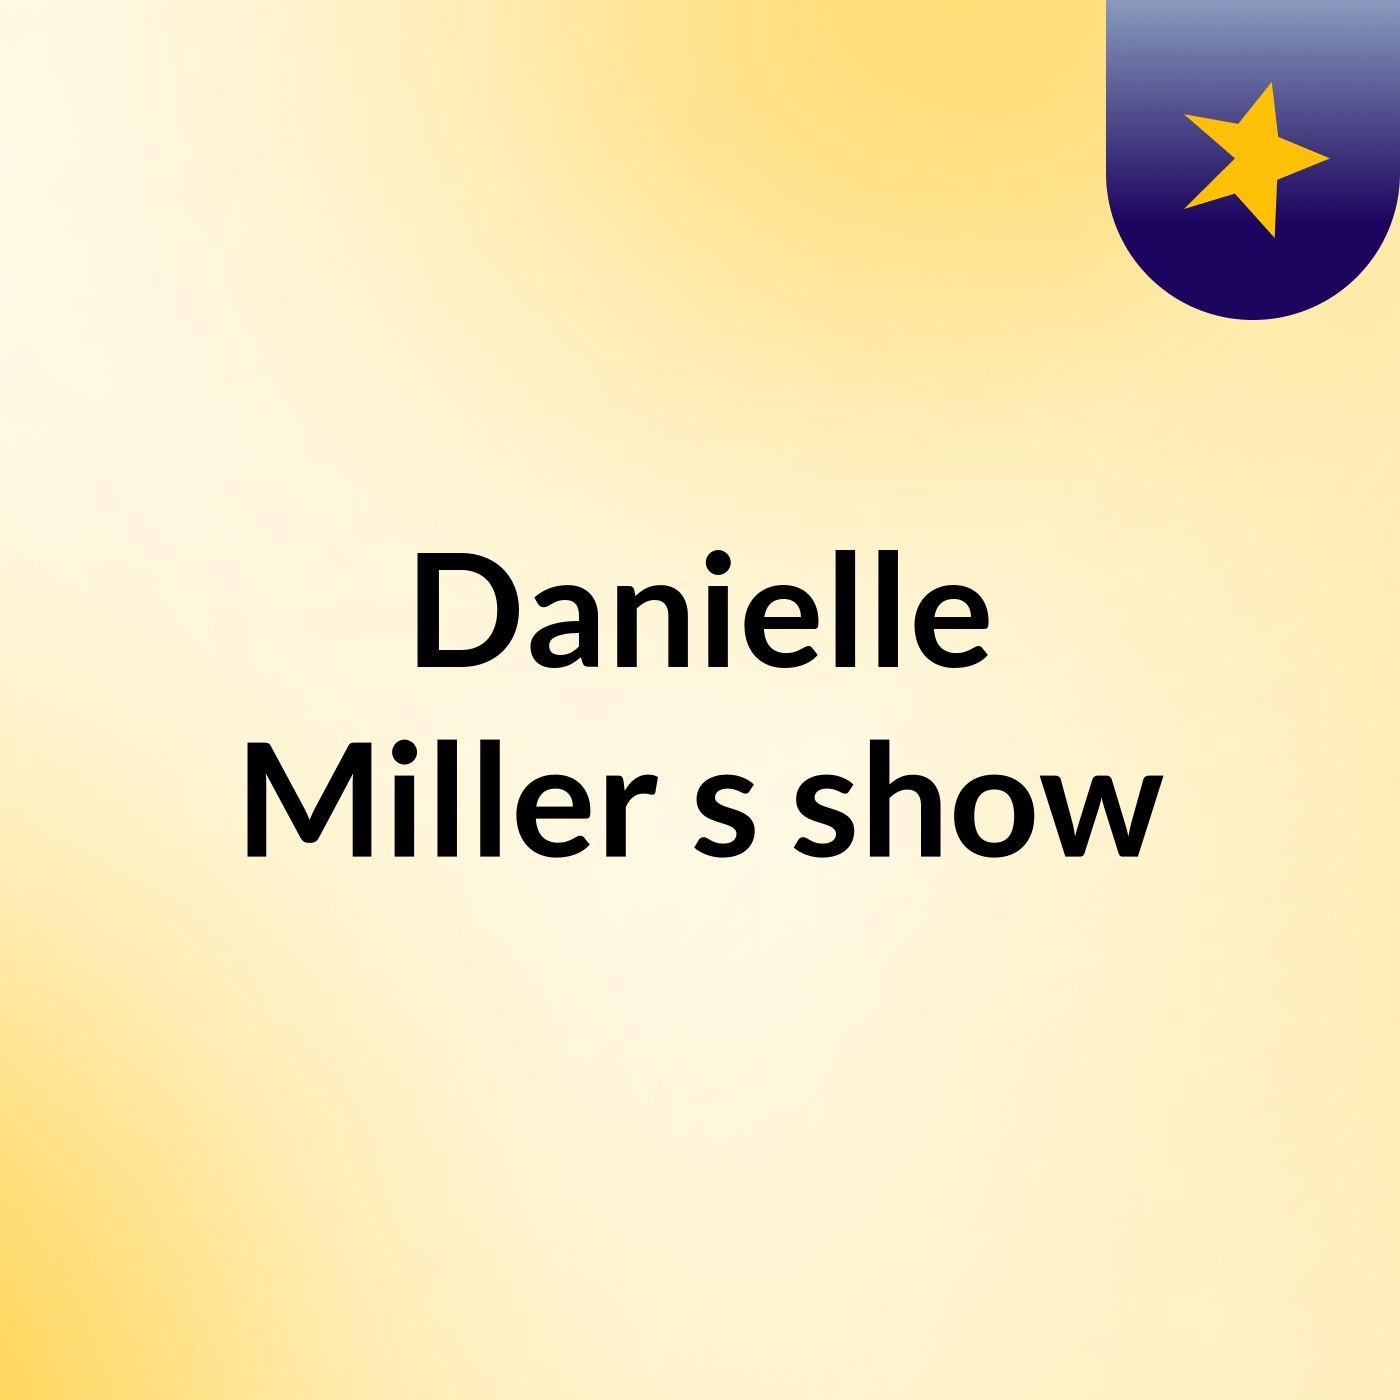 Danielle Miller's show